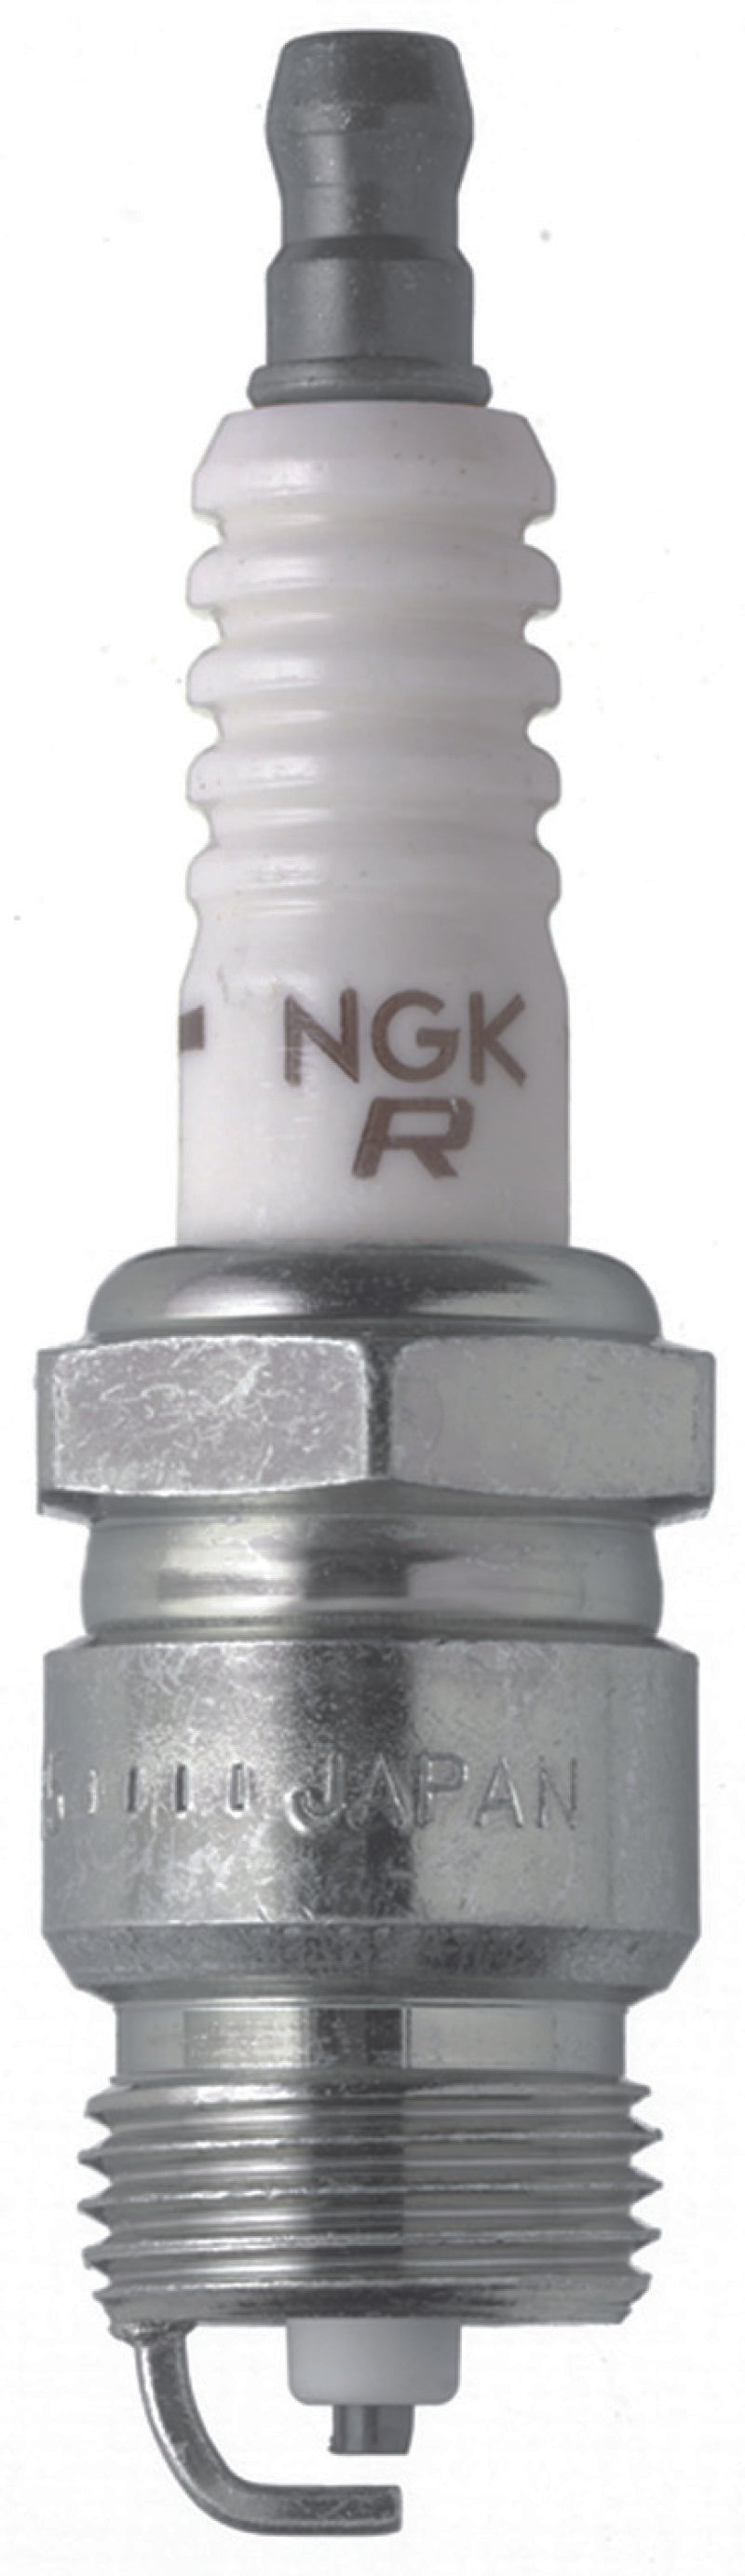 NGK V-Power Spark Plug Box of 4 (WR5).